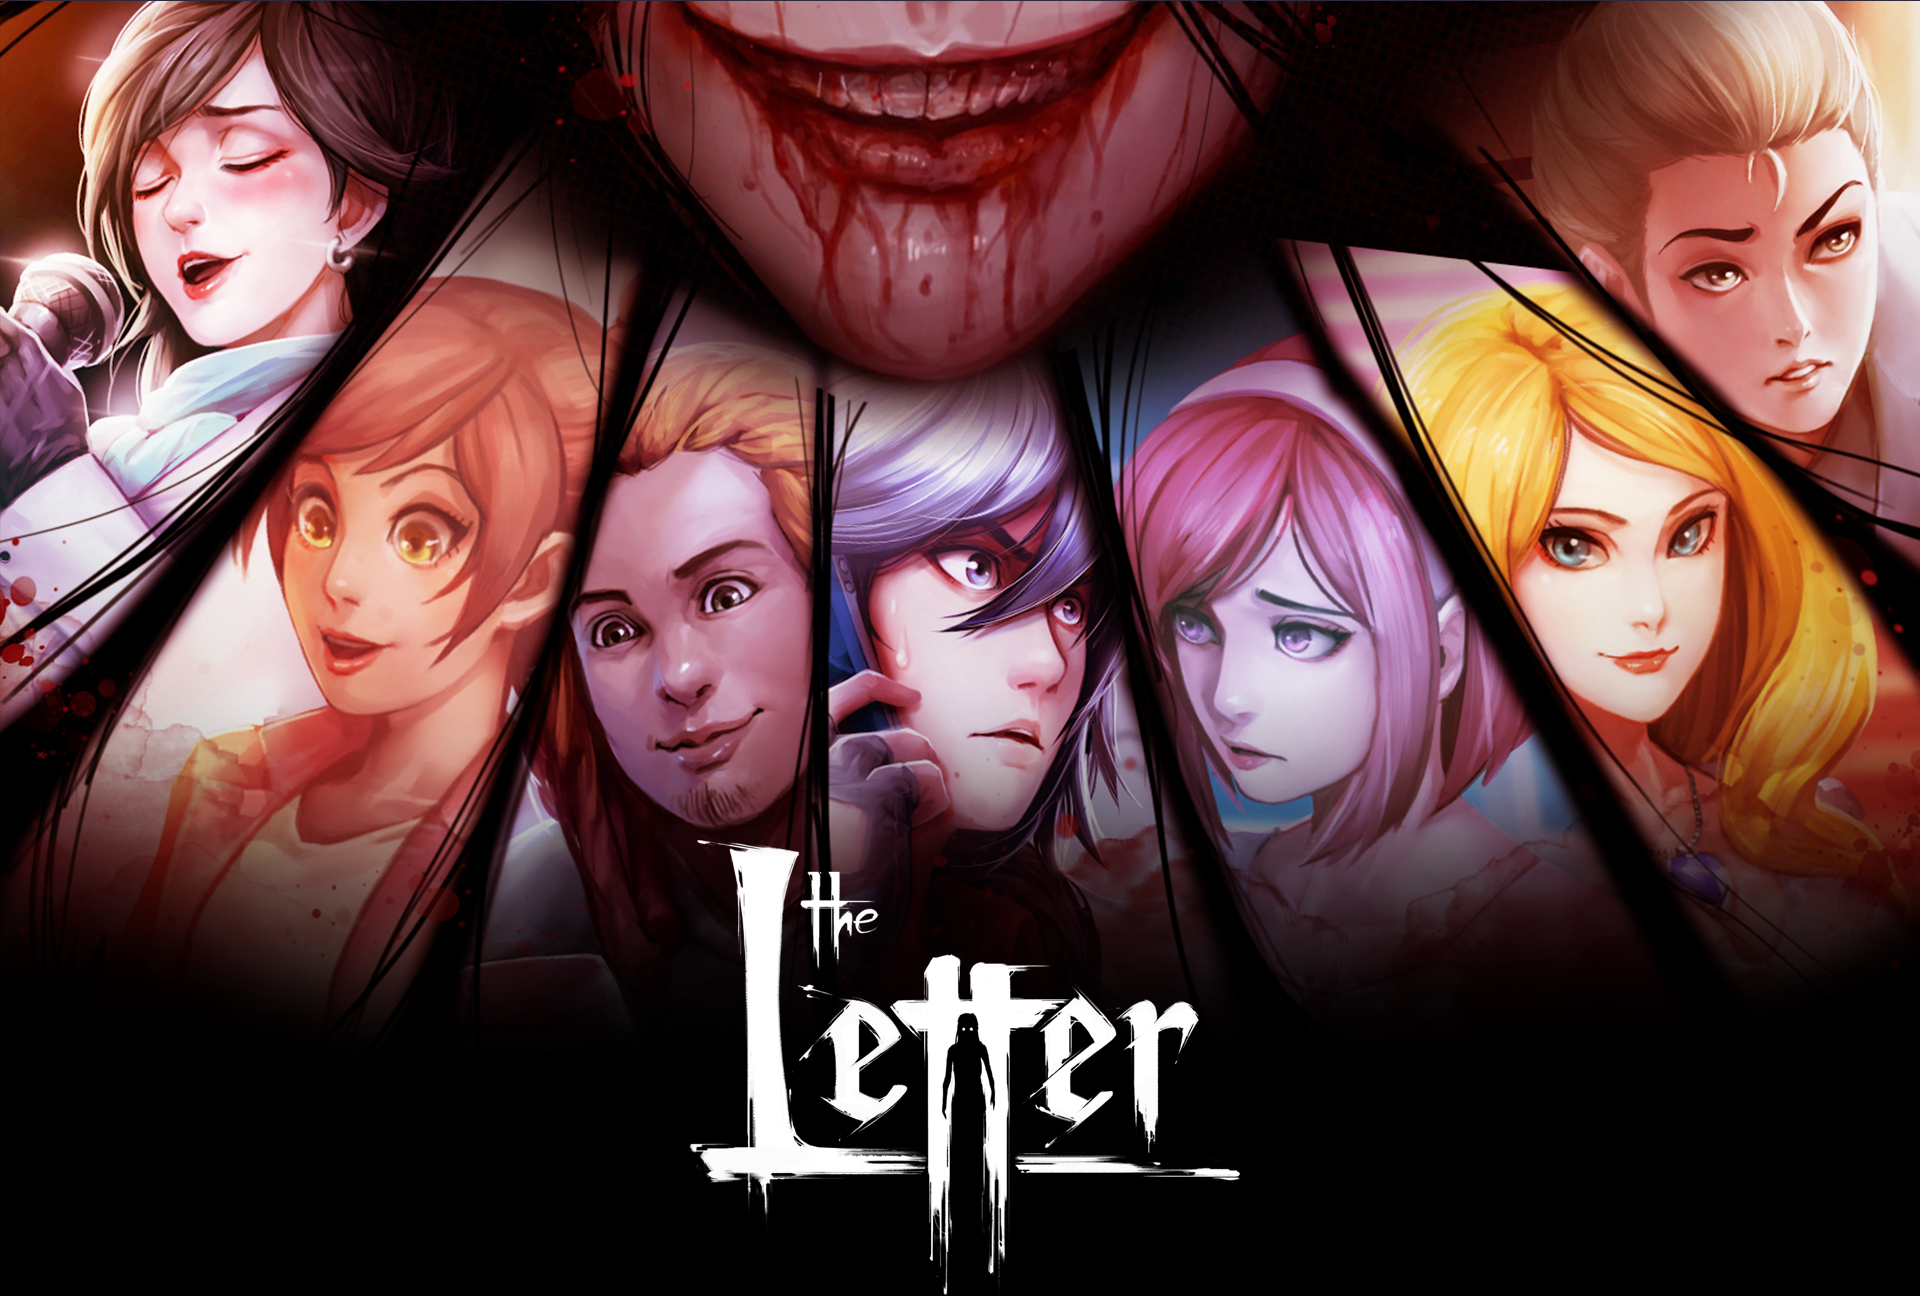 Horror novels games. The Letter новелла. The Letter Horror Visual novel. Визуальные новеллы хоррор. Визуальная новелла ужастик.